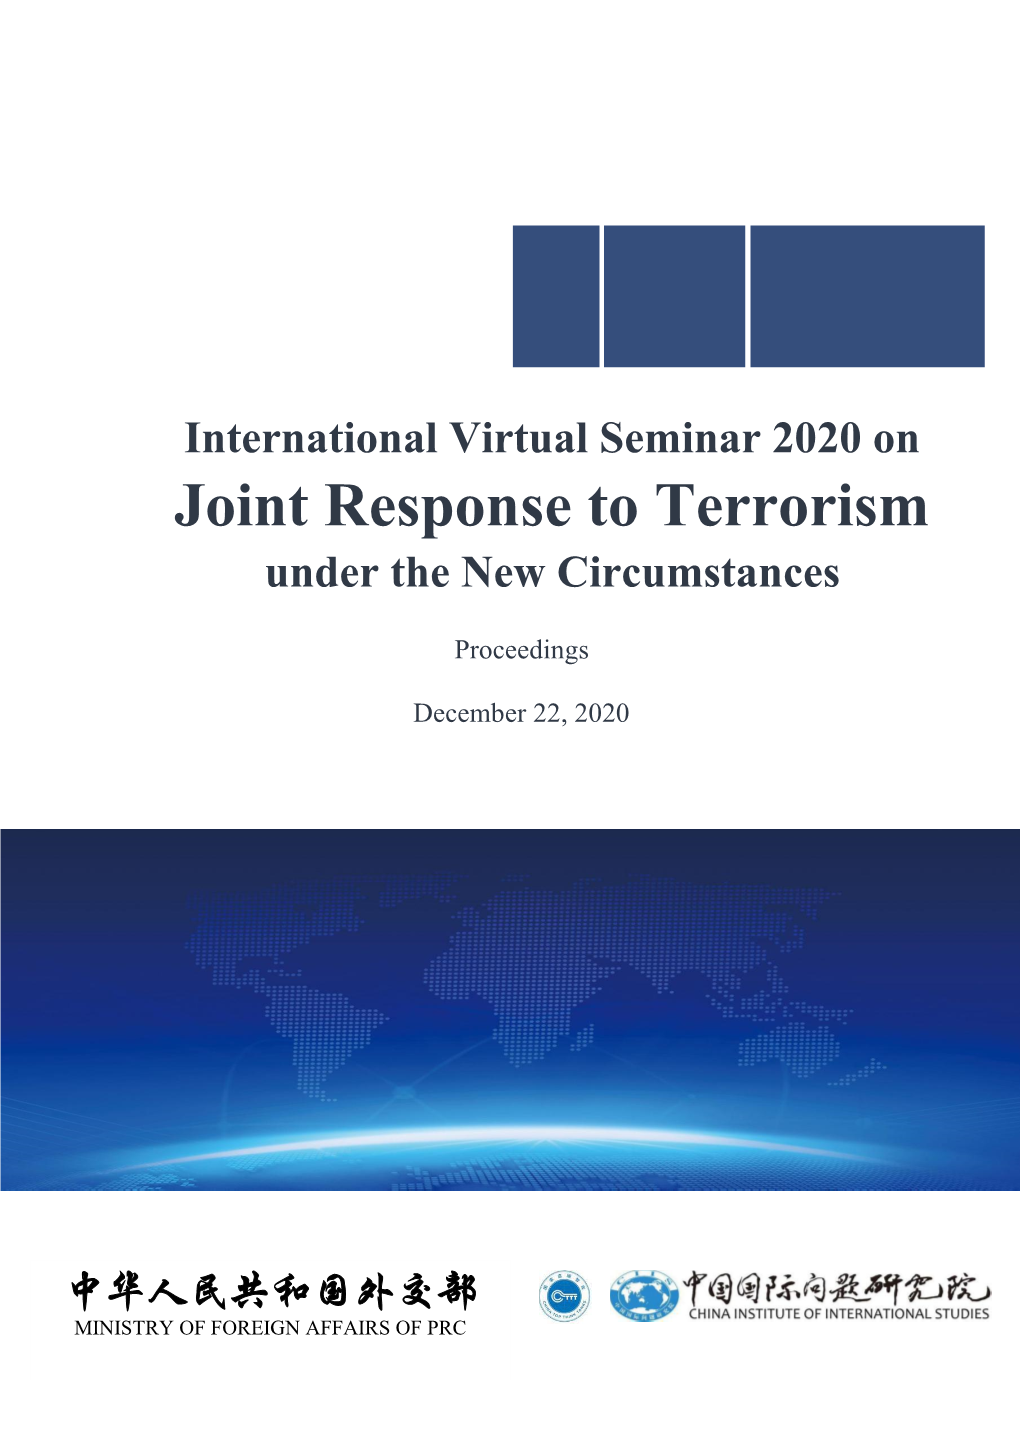 International Virtual Seminar 2020 on Joint Response to Terrorism Under the New Circumstances